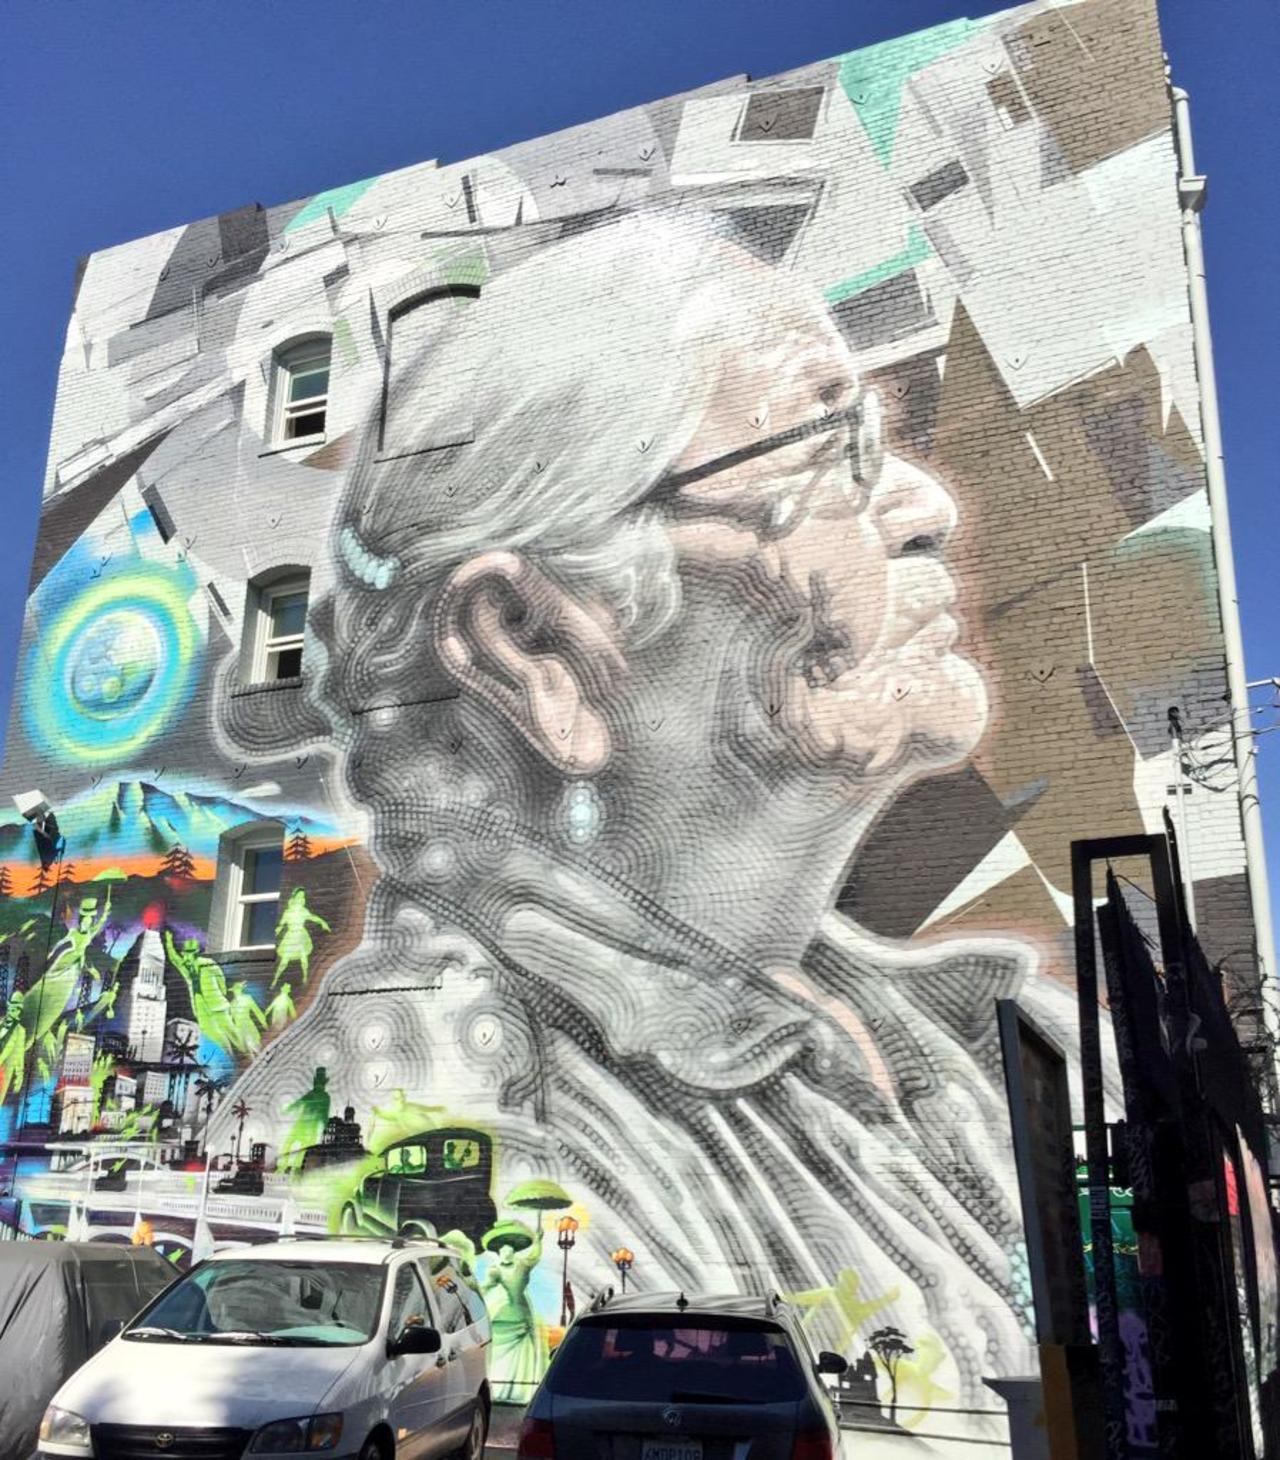 EL MAC's work is always amazing. #Graffiti #StreetArt #LosAngeles #ArtsDistrict #DTLA http://t.co/JZoPJKKcqm